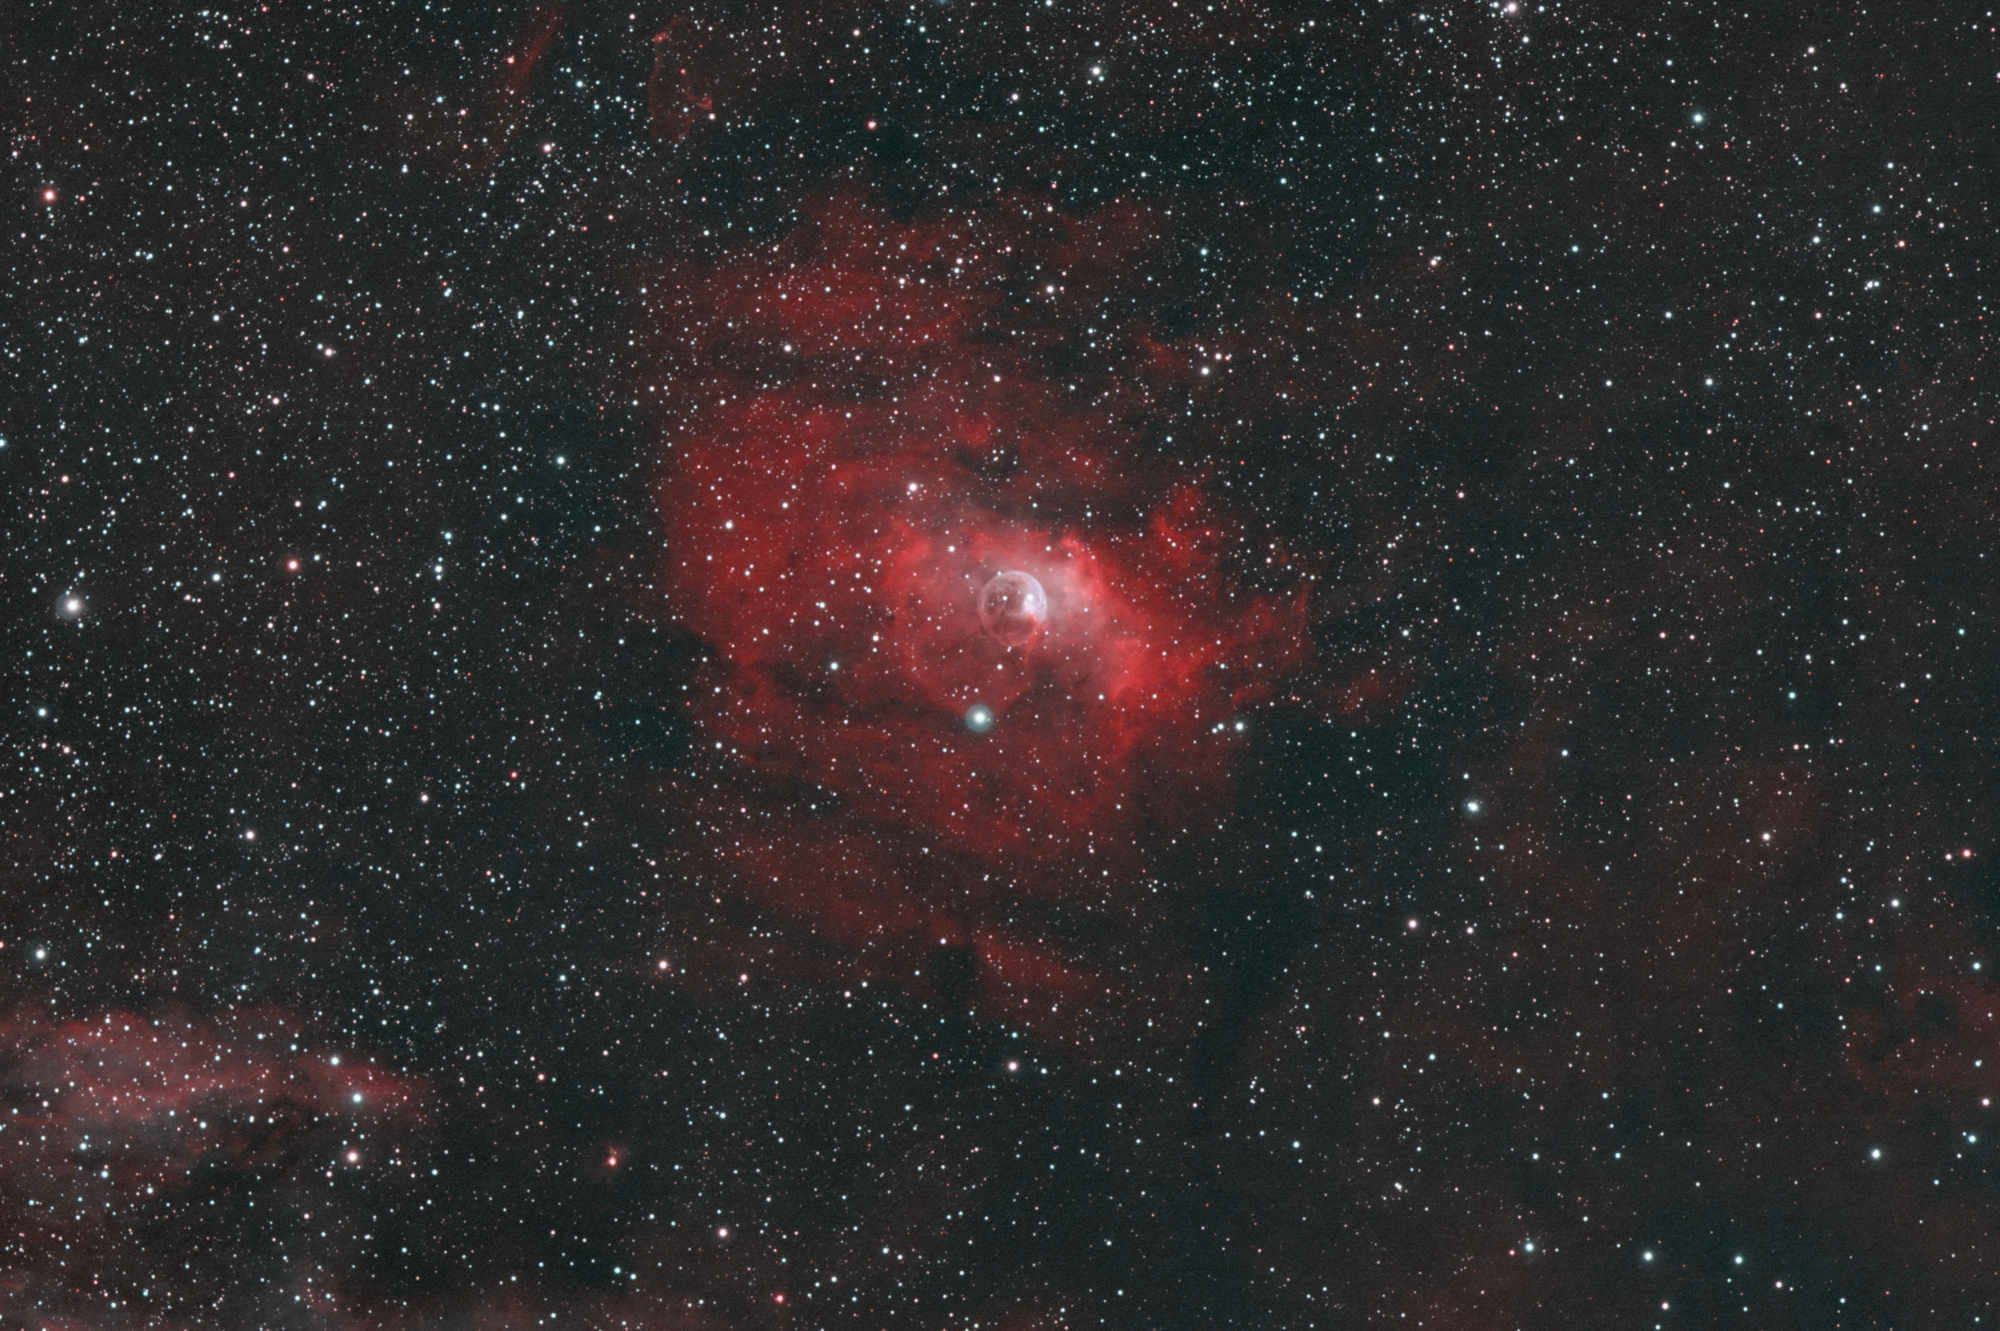 NGC_7635_SIRIL-HOO1-iris-cs5-2-FINAL-x.jpg